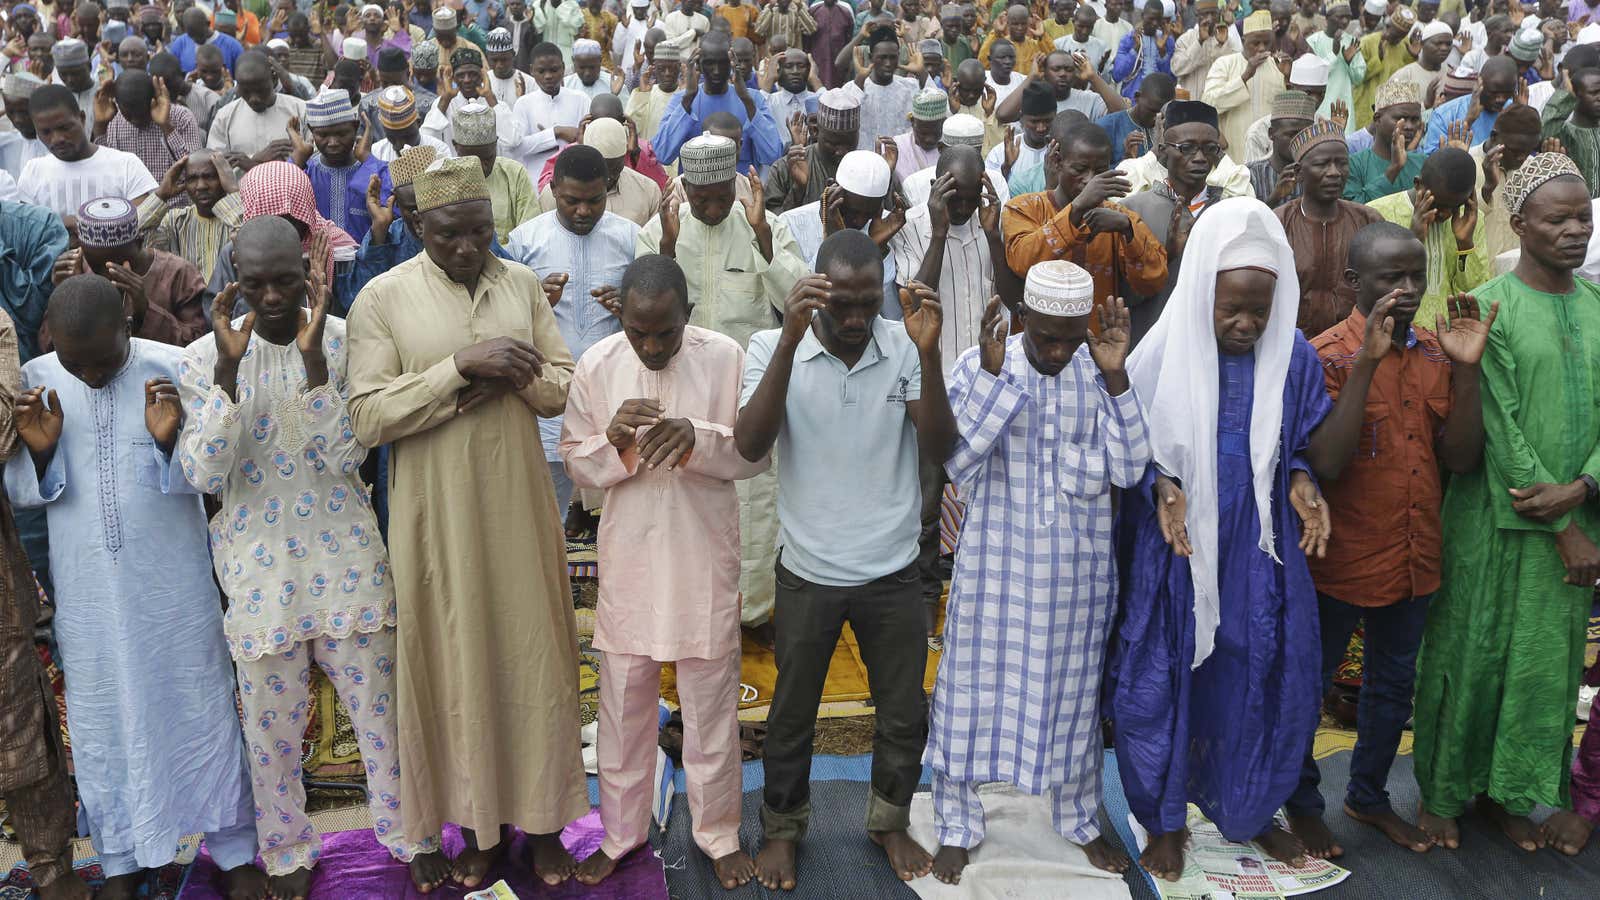 Nigeria has the world’s fifth largest Muslim population.